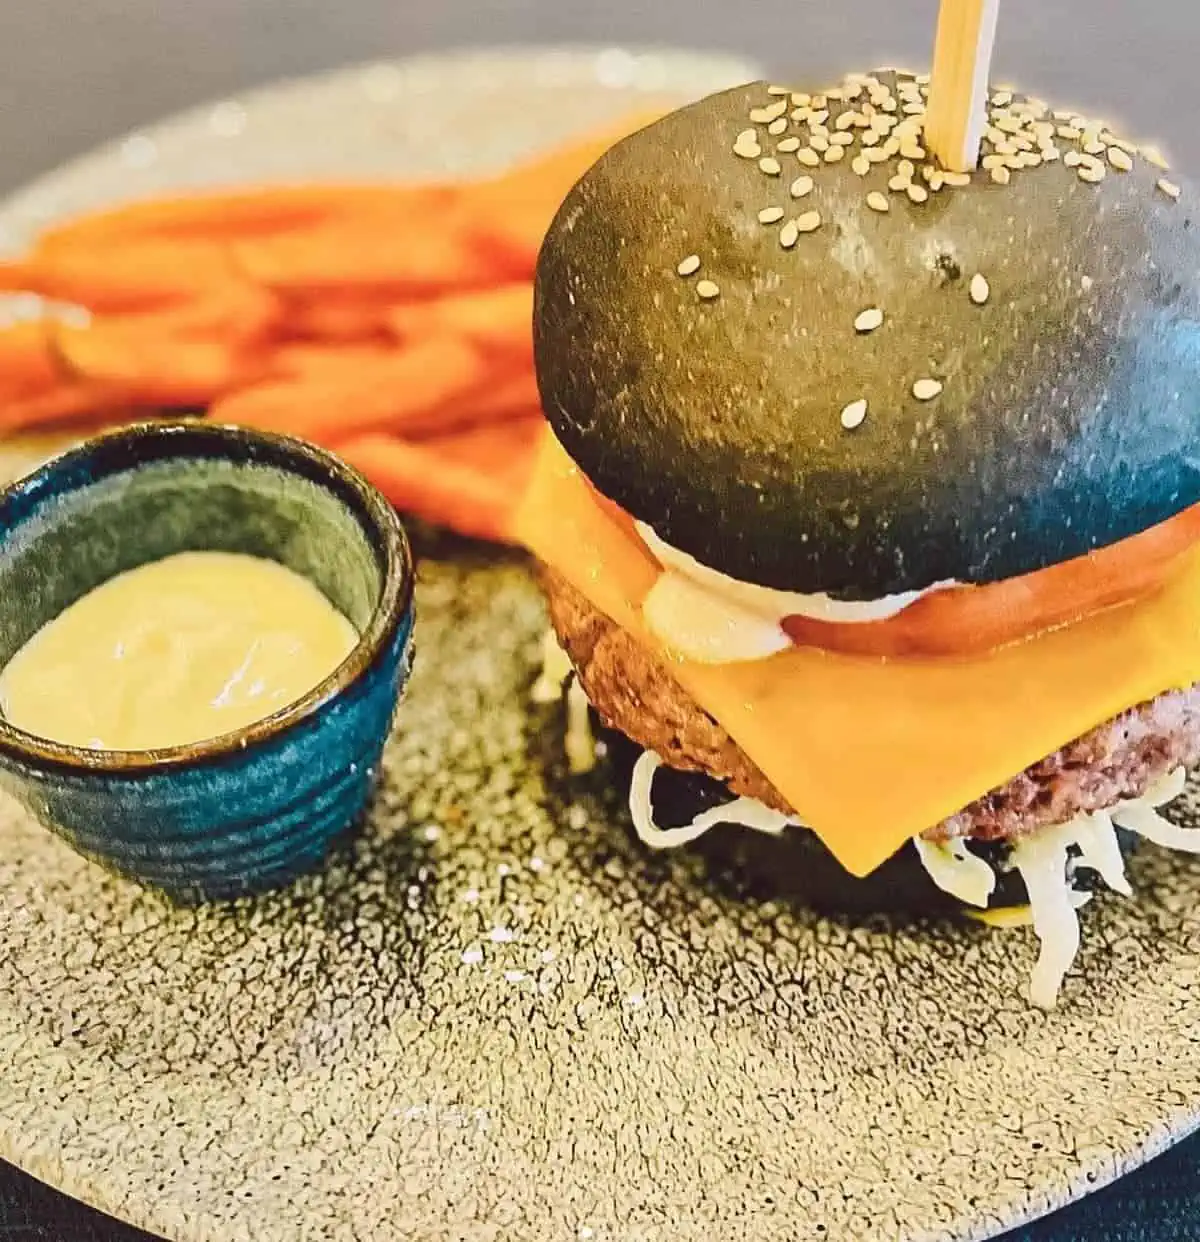 An Impossible Burger vegan option on Oceania cruises.